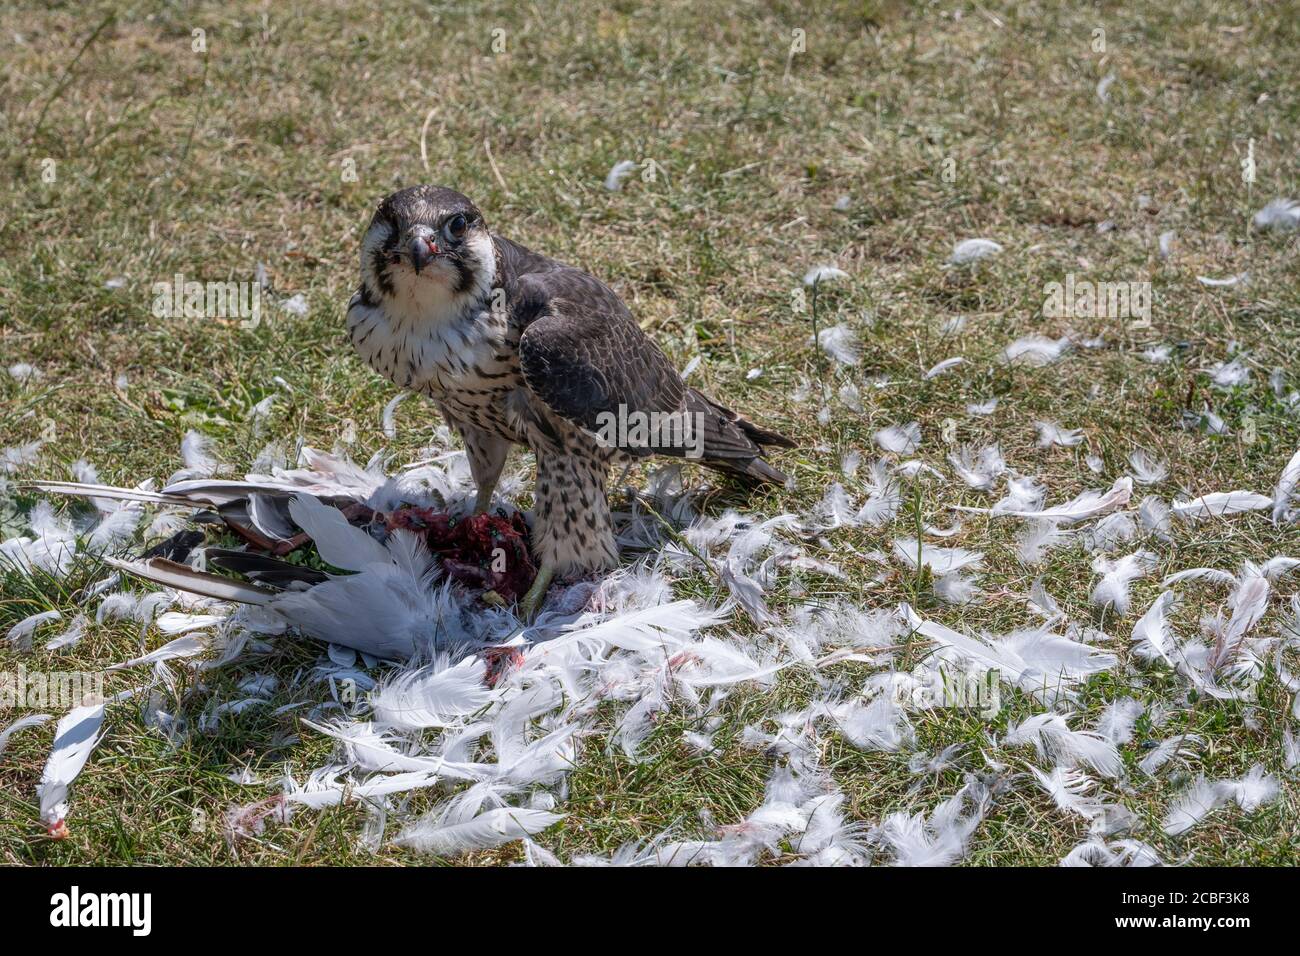 Peregrine falcon feeding on a pigeon carcass Stock Photo